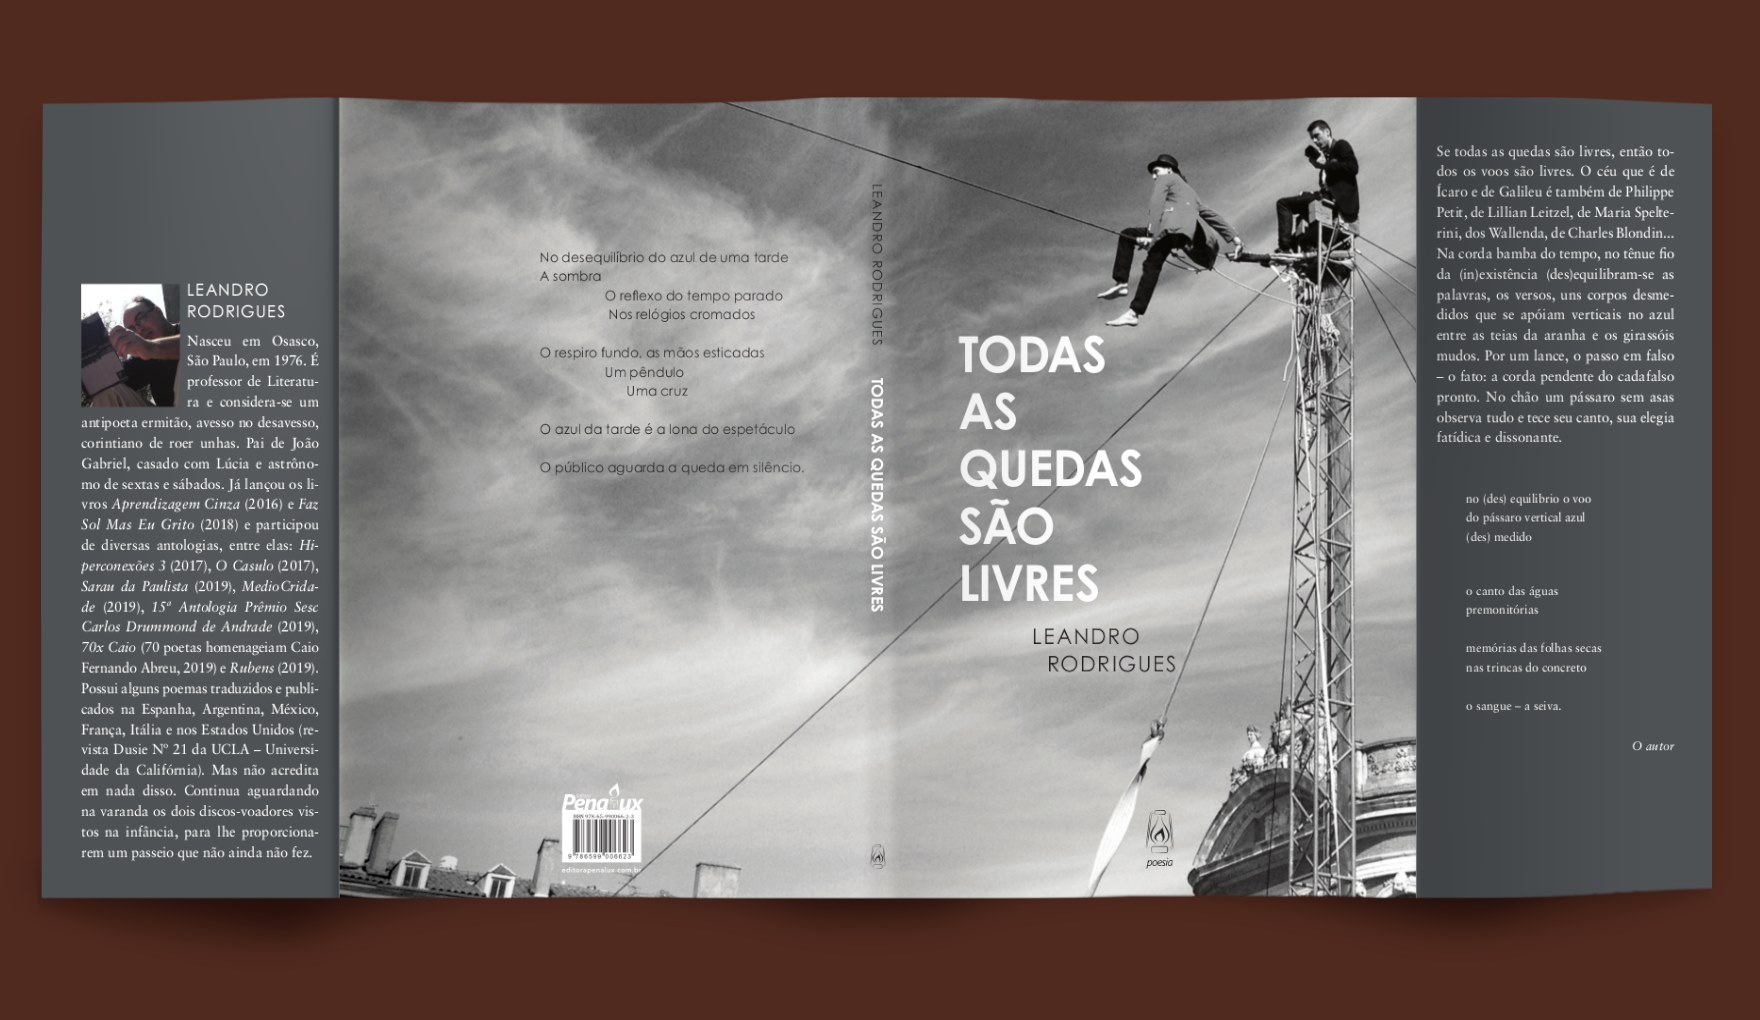 LEANDRO FOTO LIVRO PENALUX 2020 - Fernando Andrade entrevista o poeta Leandro Rodrigues